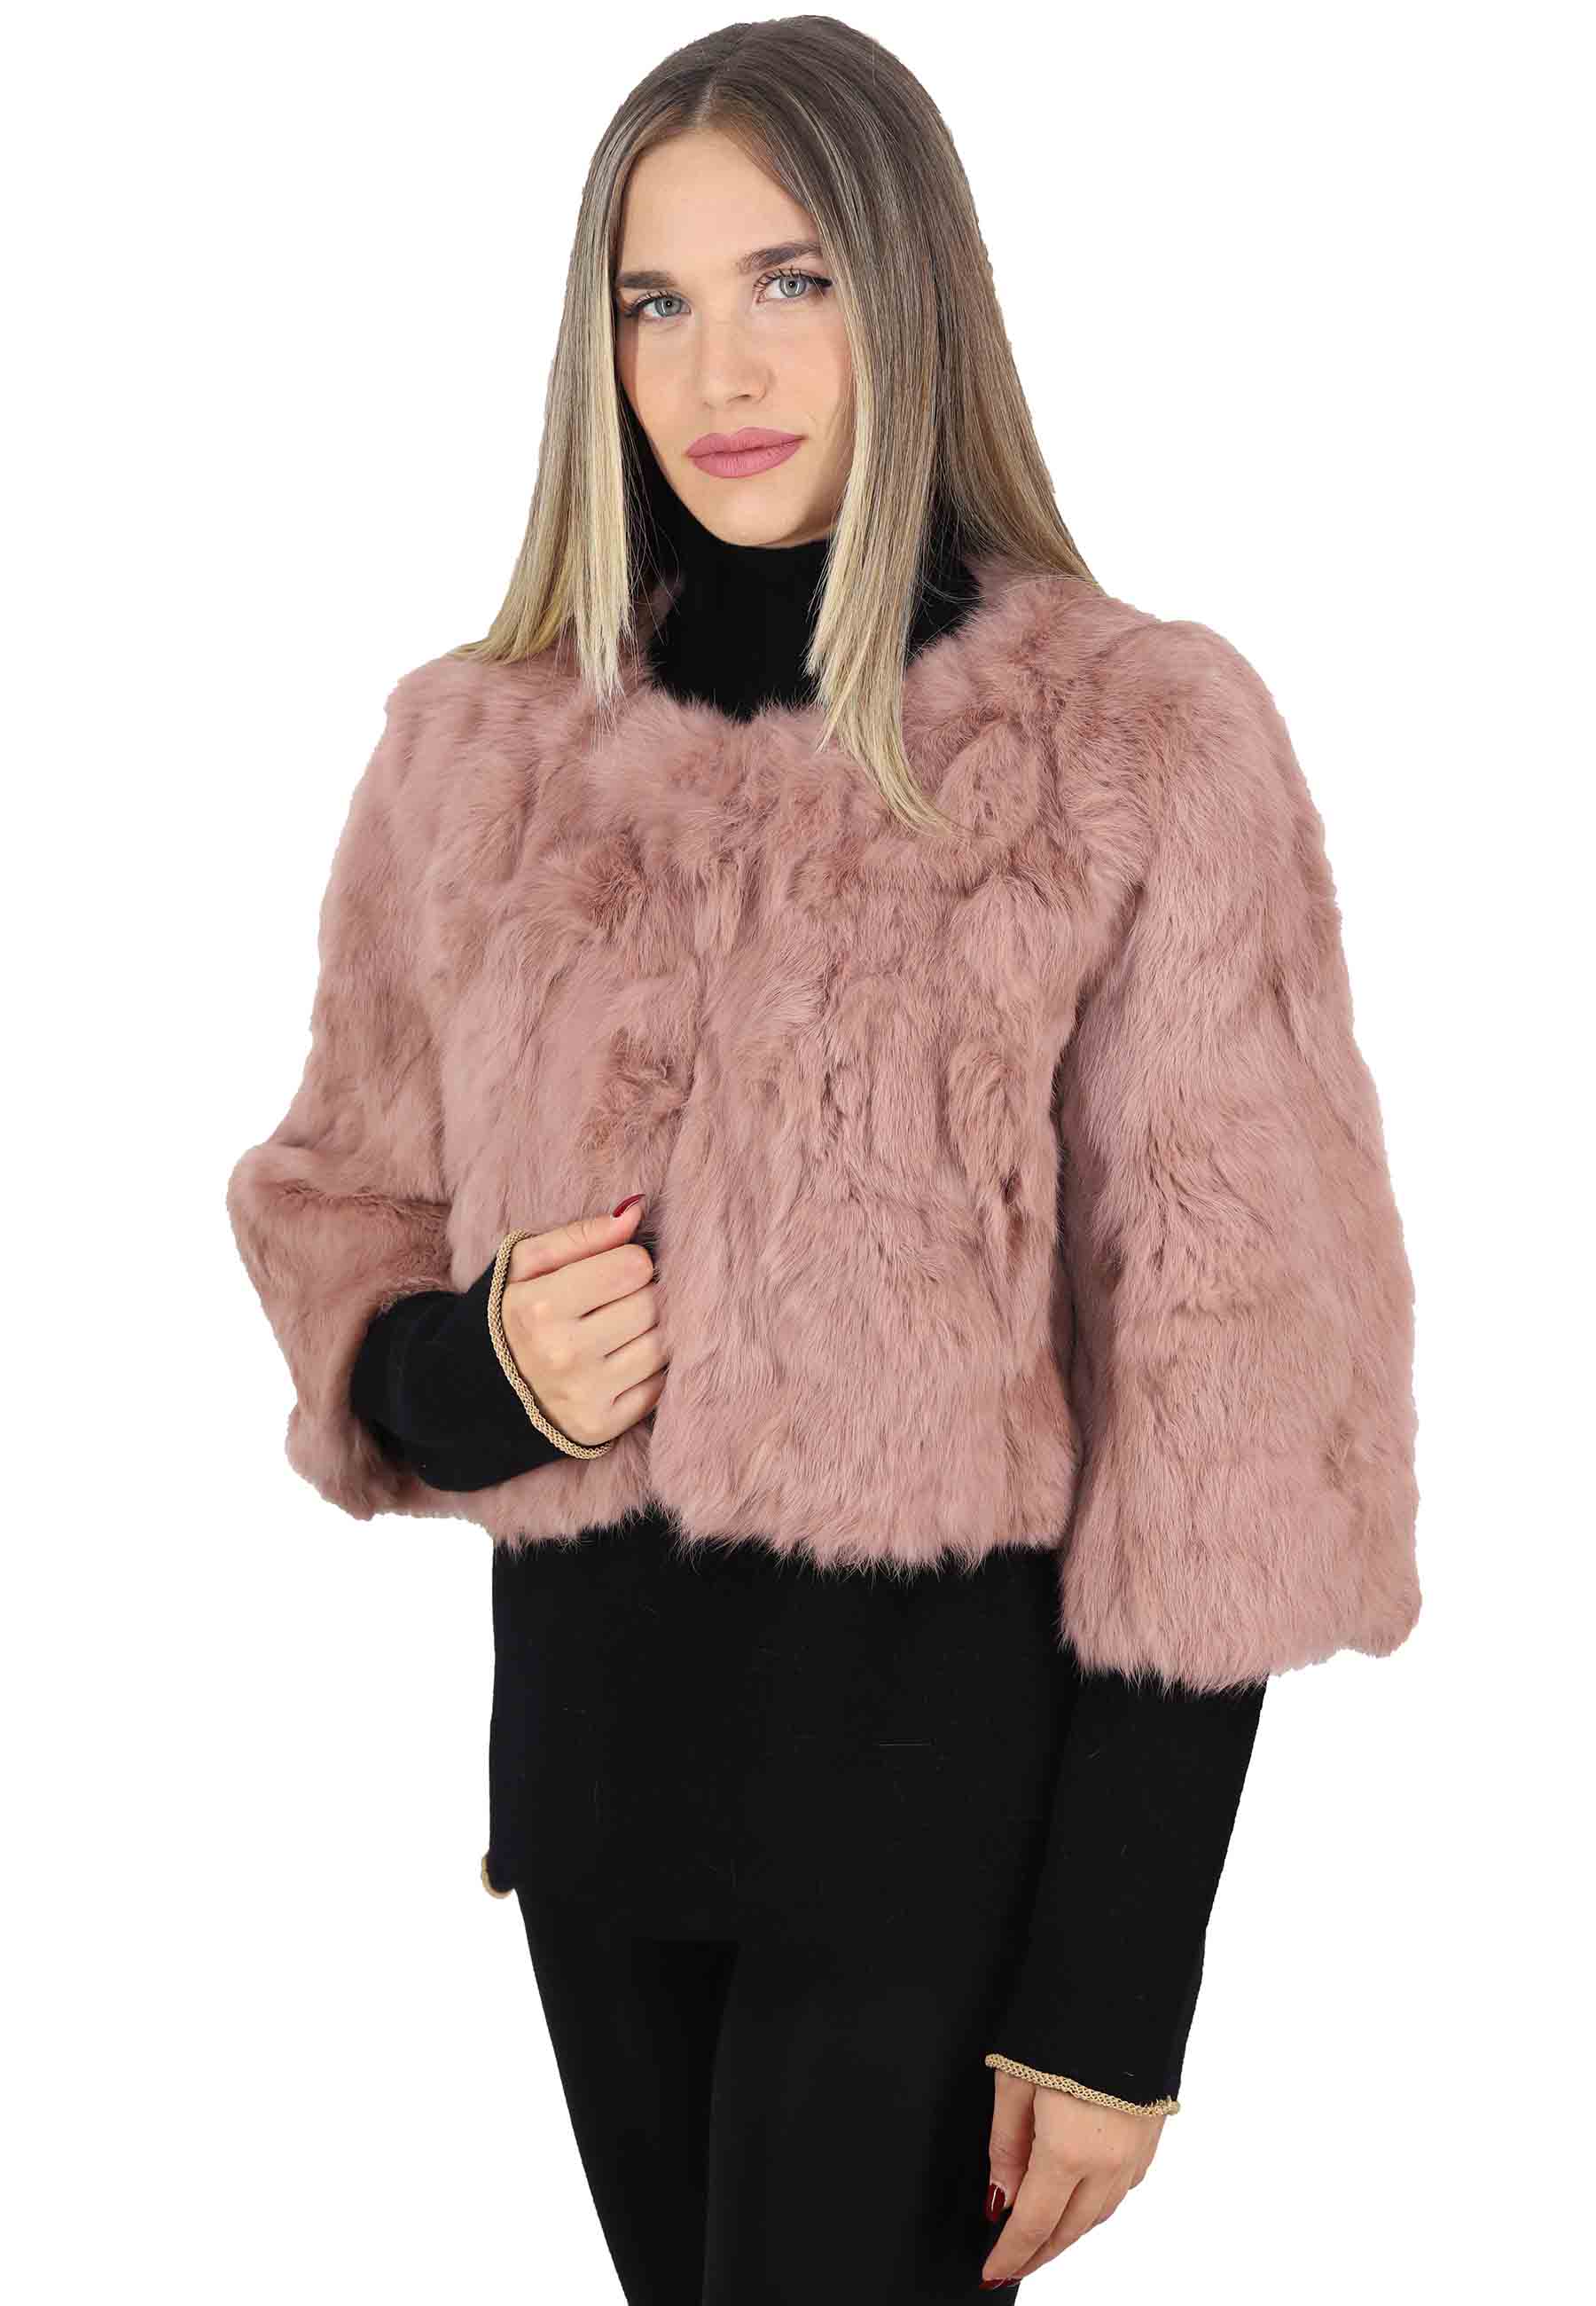 Women's jackets in powder pink rabbit with crew neck